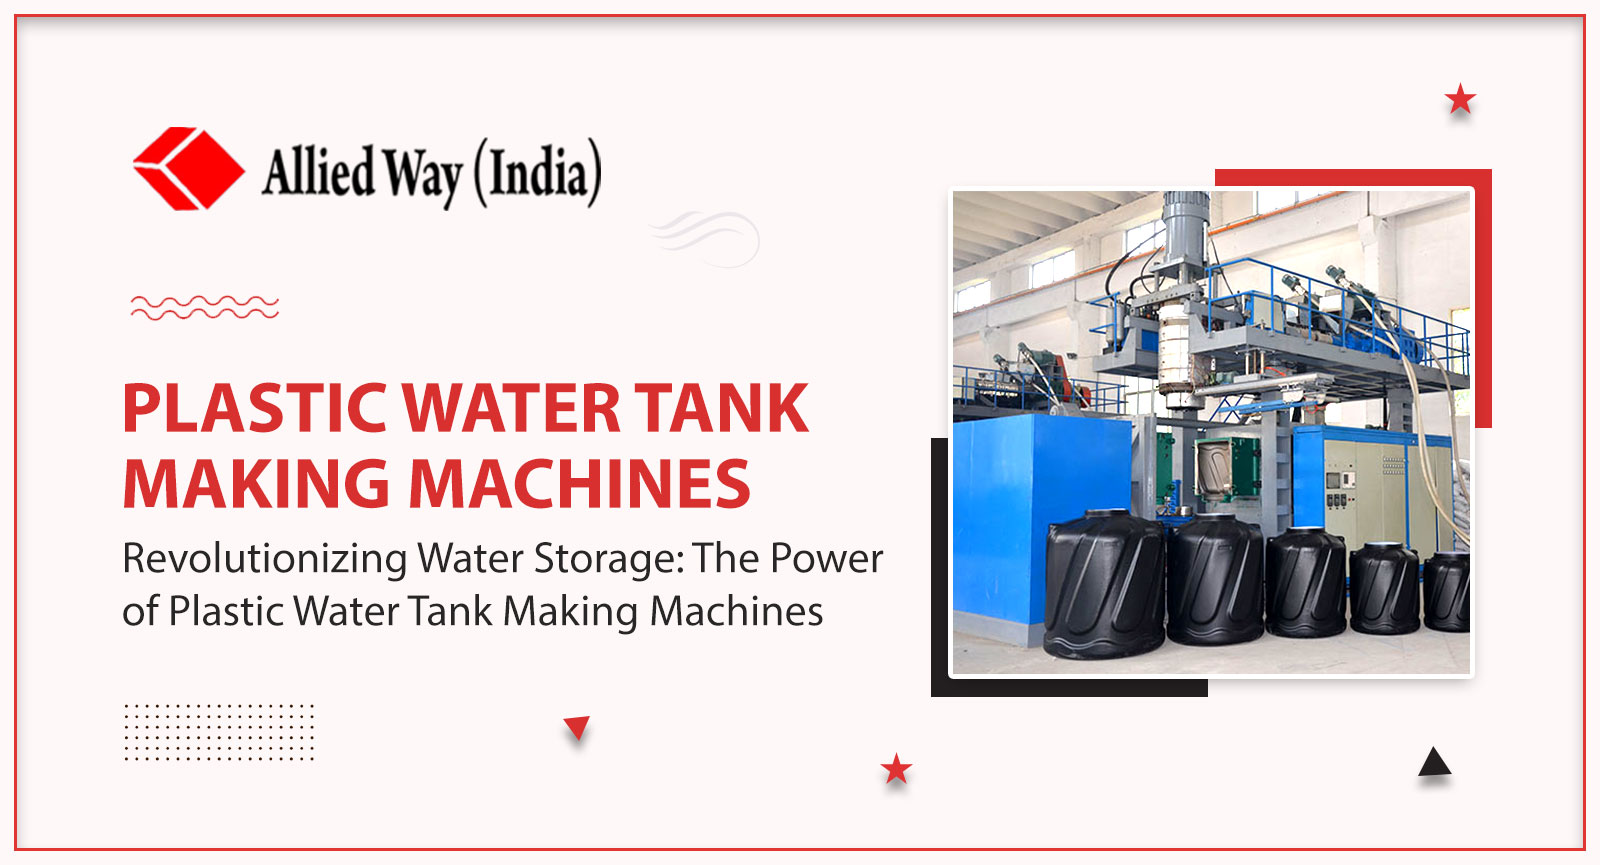 Revolutionizing Water Storage: The Power of Plastic Water Tank Making Machines, Allied Way (India)